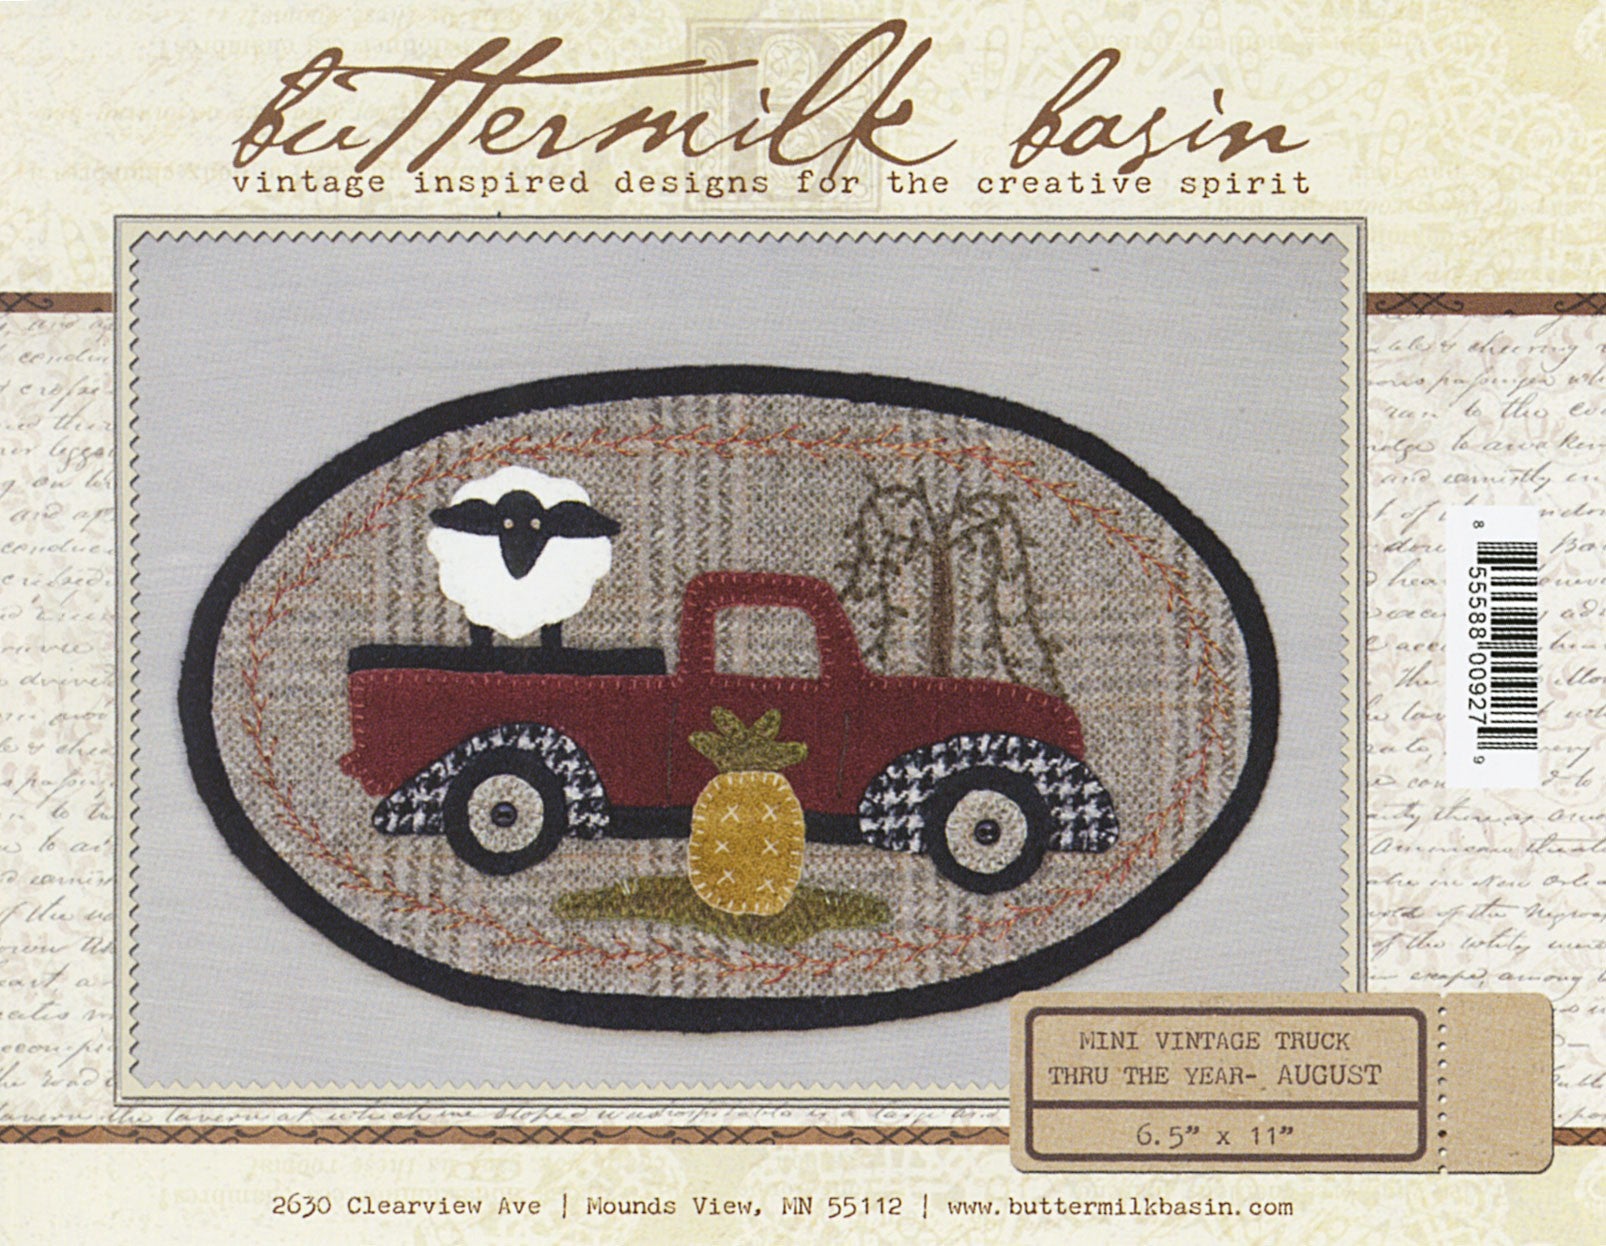 Mini Vintage Truck Thru The Year August Applique Pattern by Buttermilk Basin